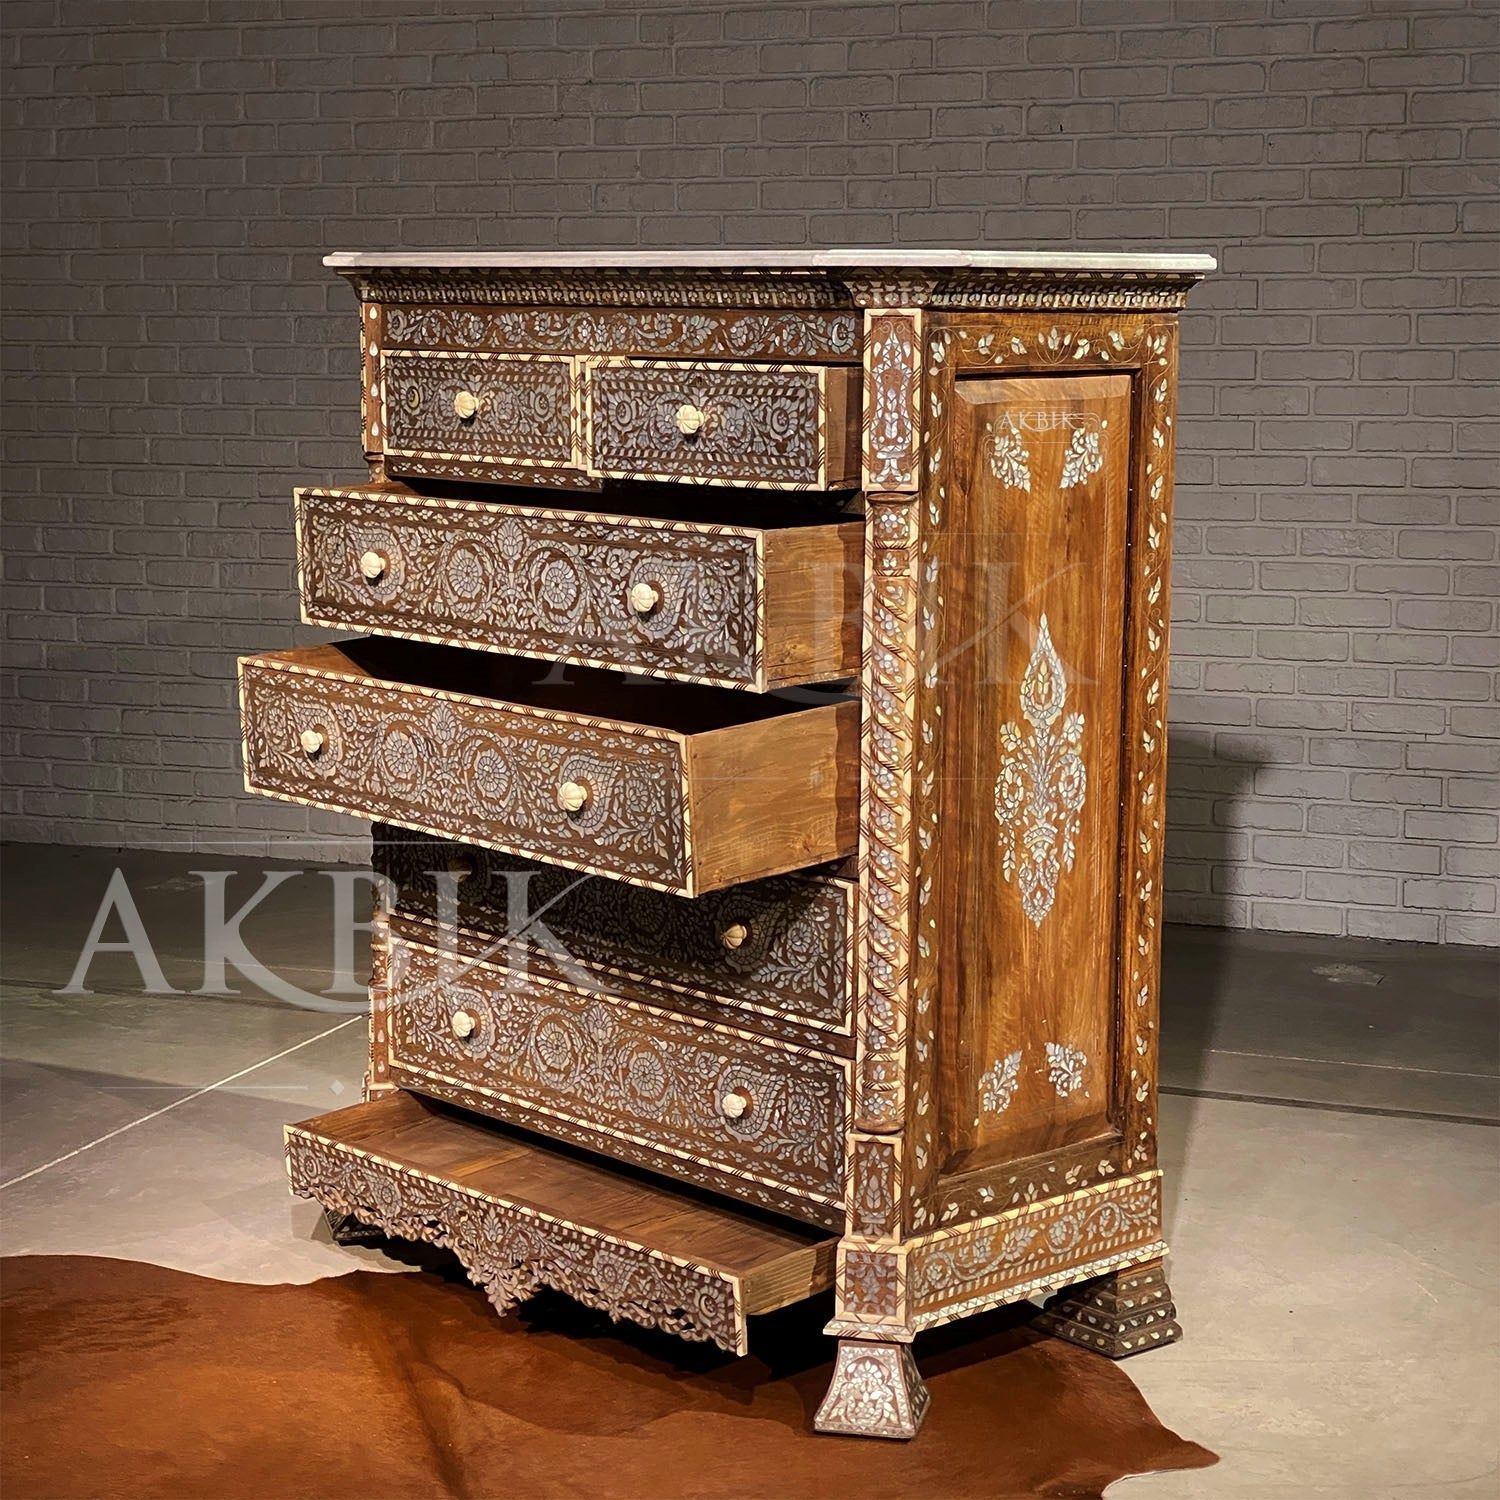 JEWEL OF THE ORIENT CHEST - AKBIK Furniture & Design